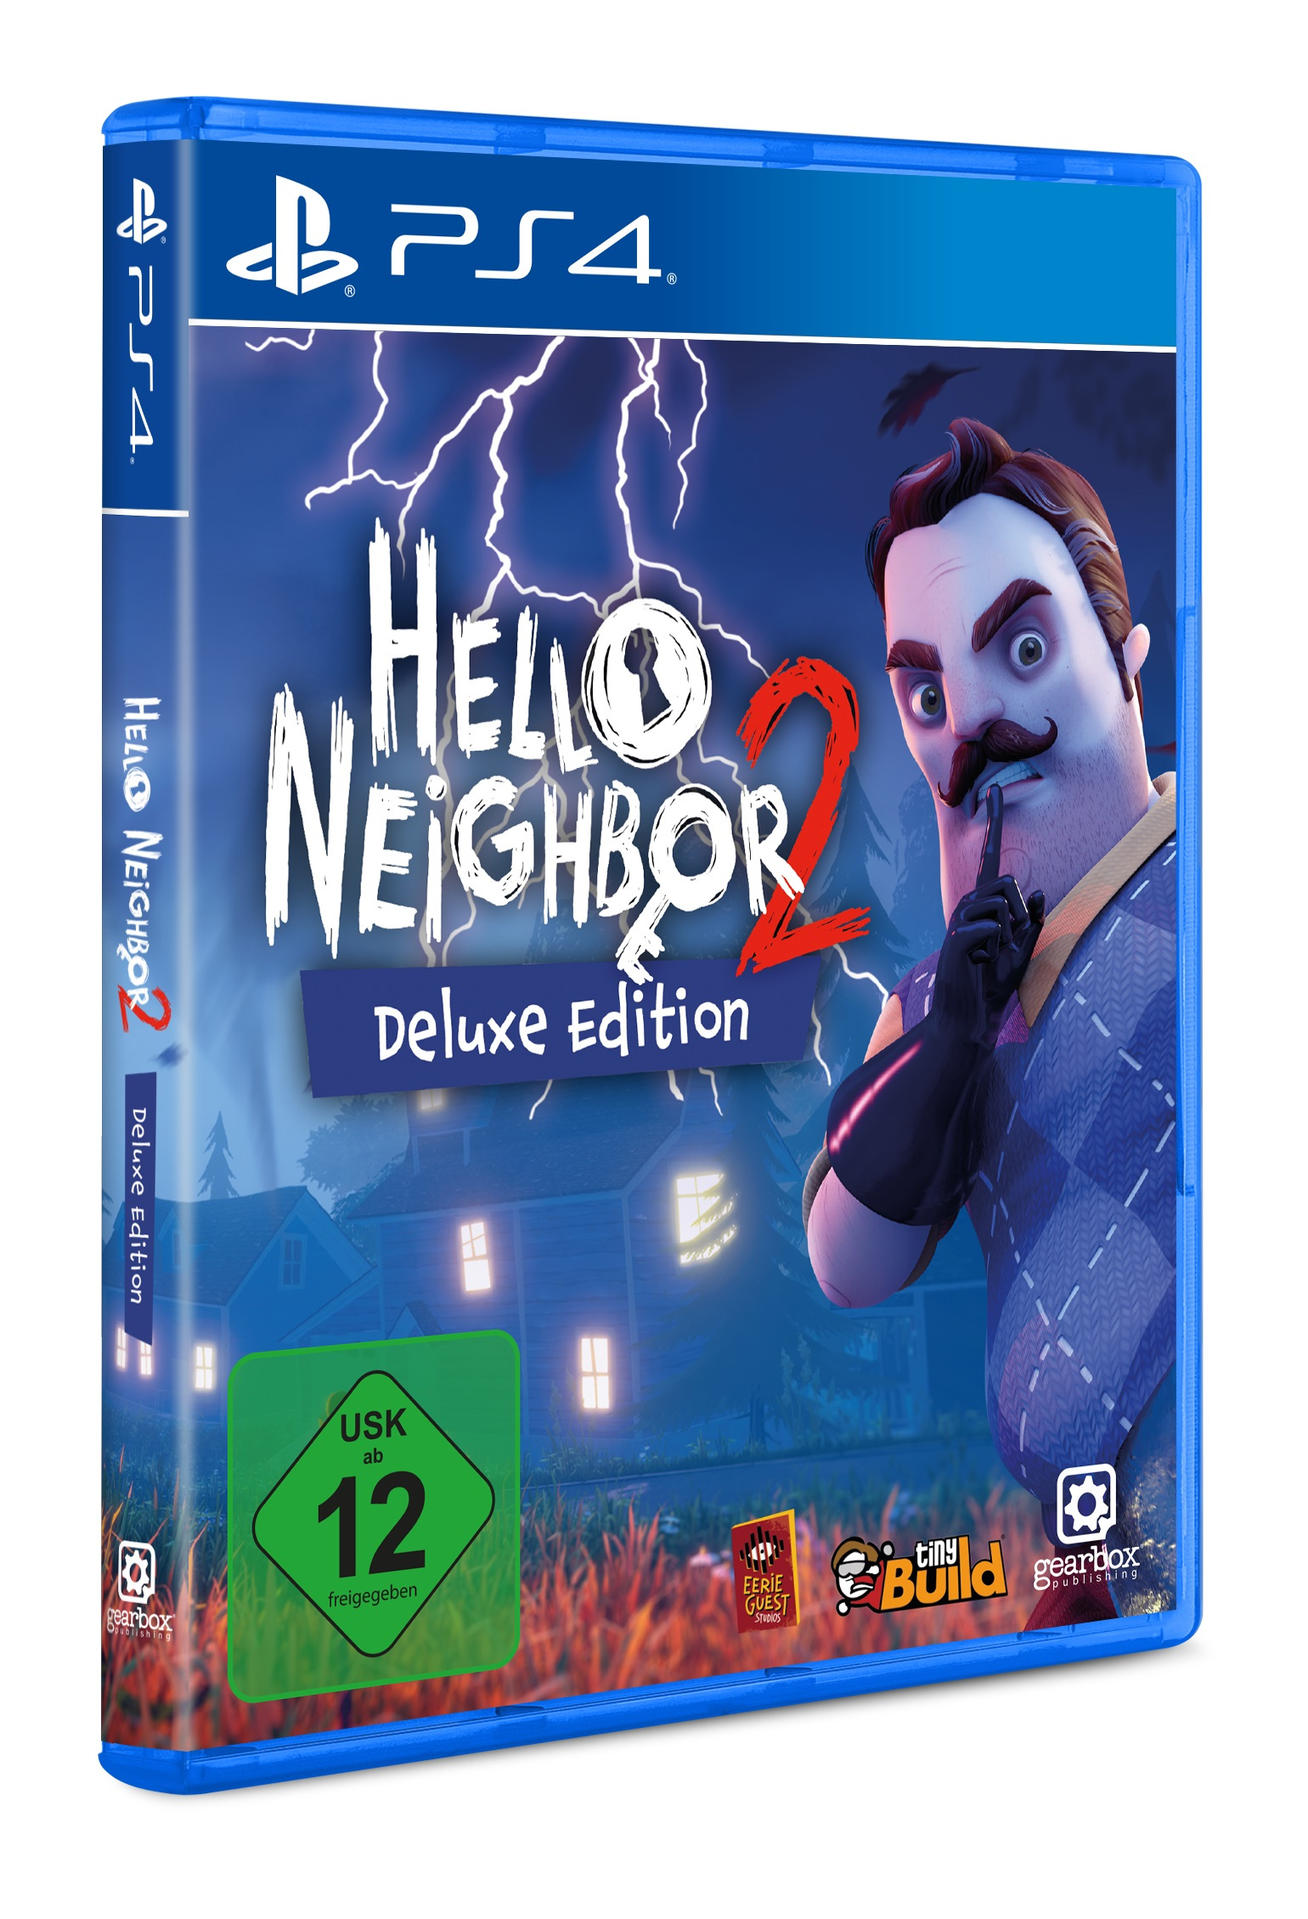 Deluxe Hello [PlayStation 2 Neighbor 4] Edition -